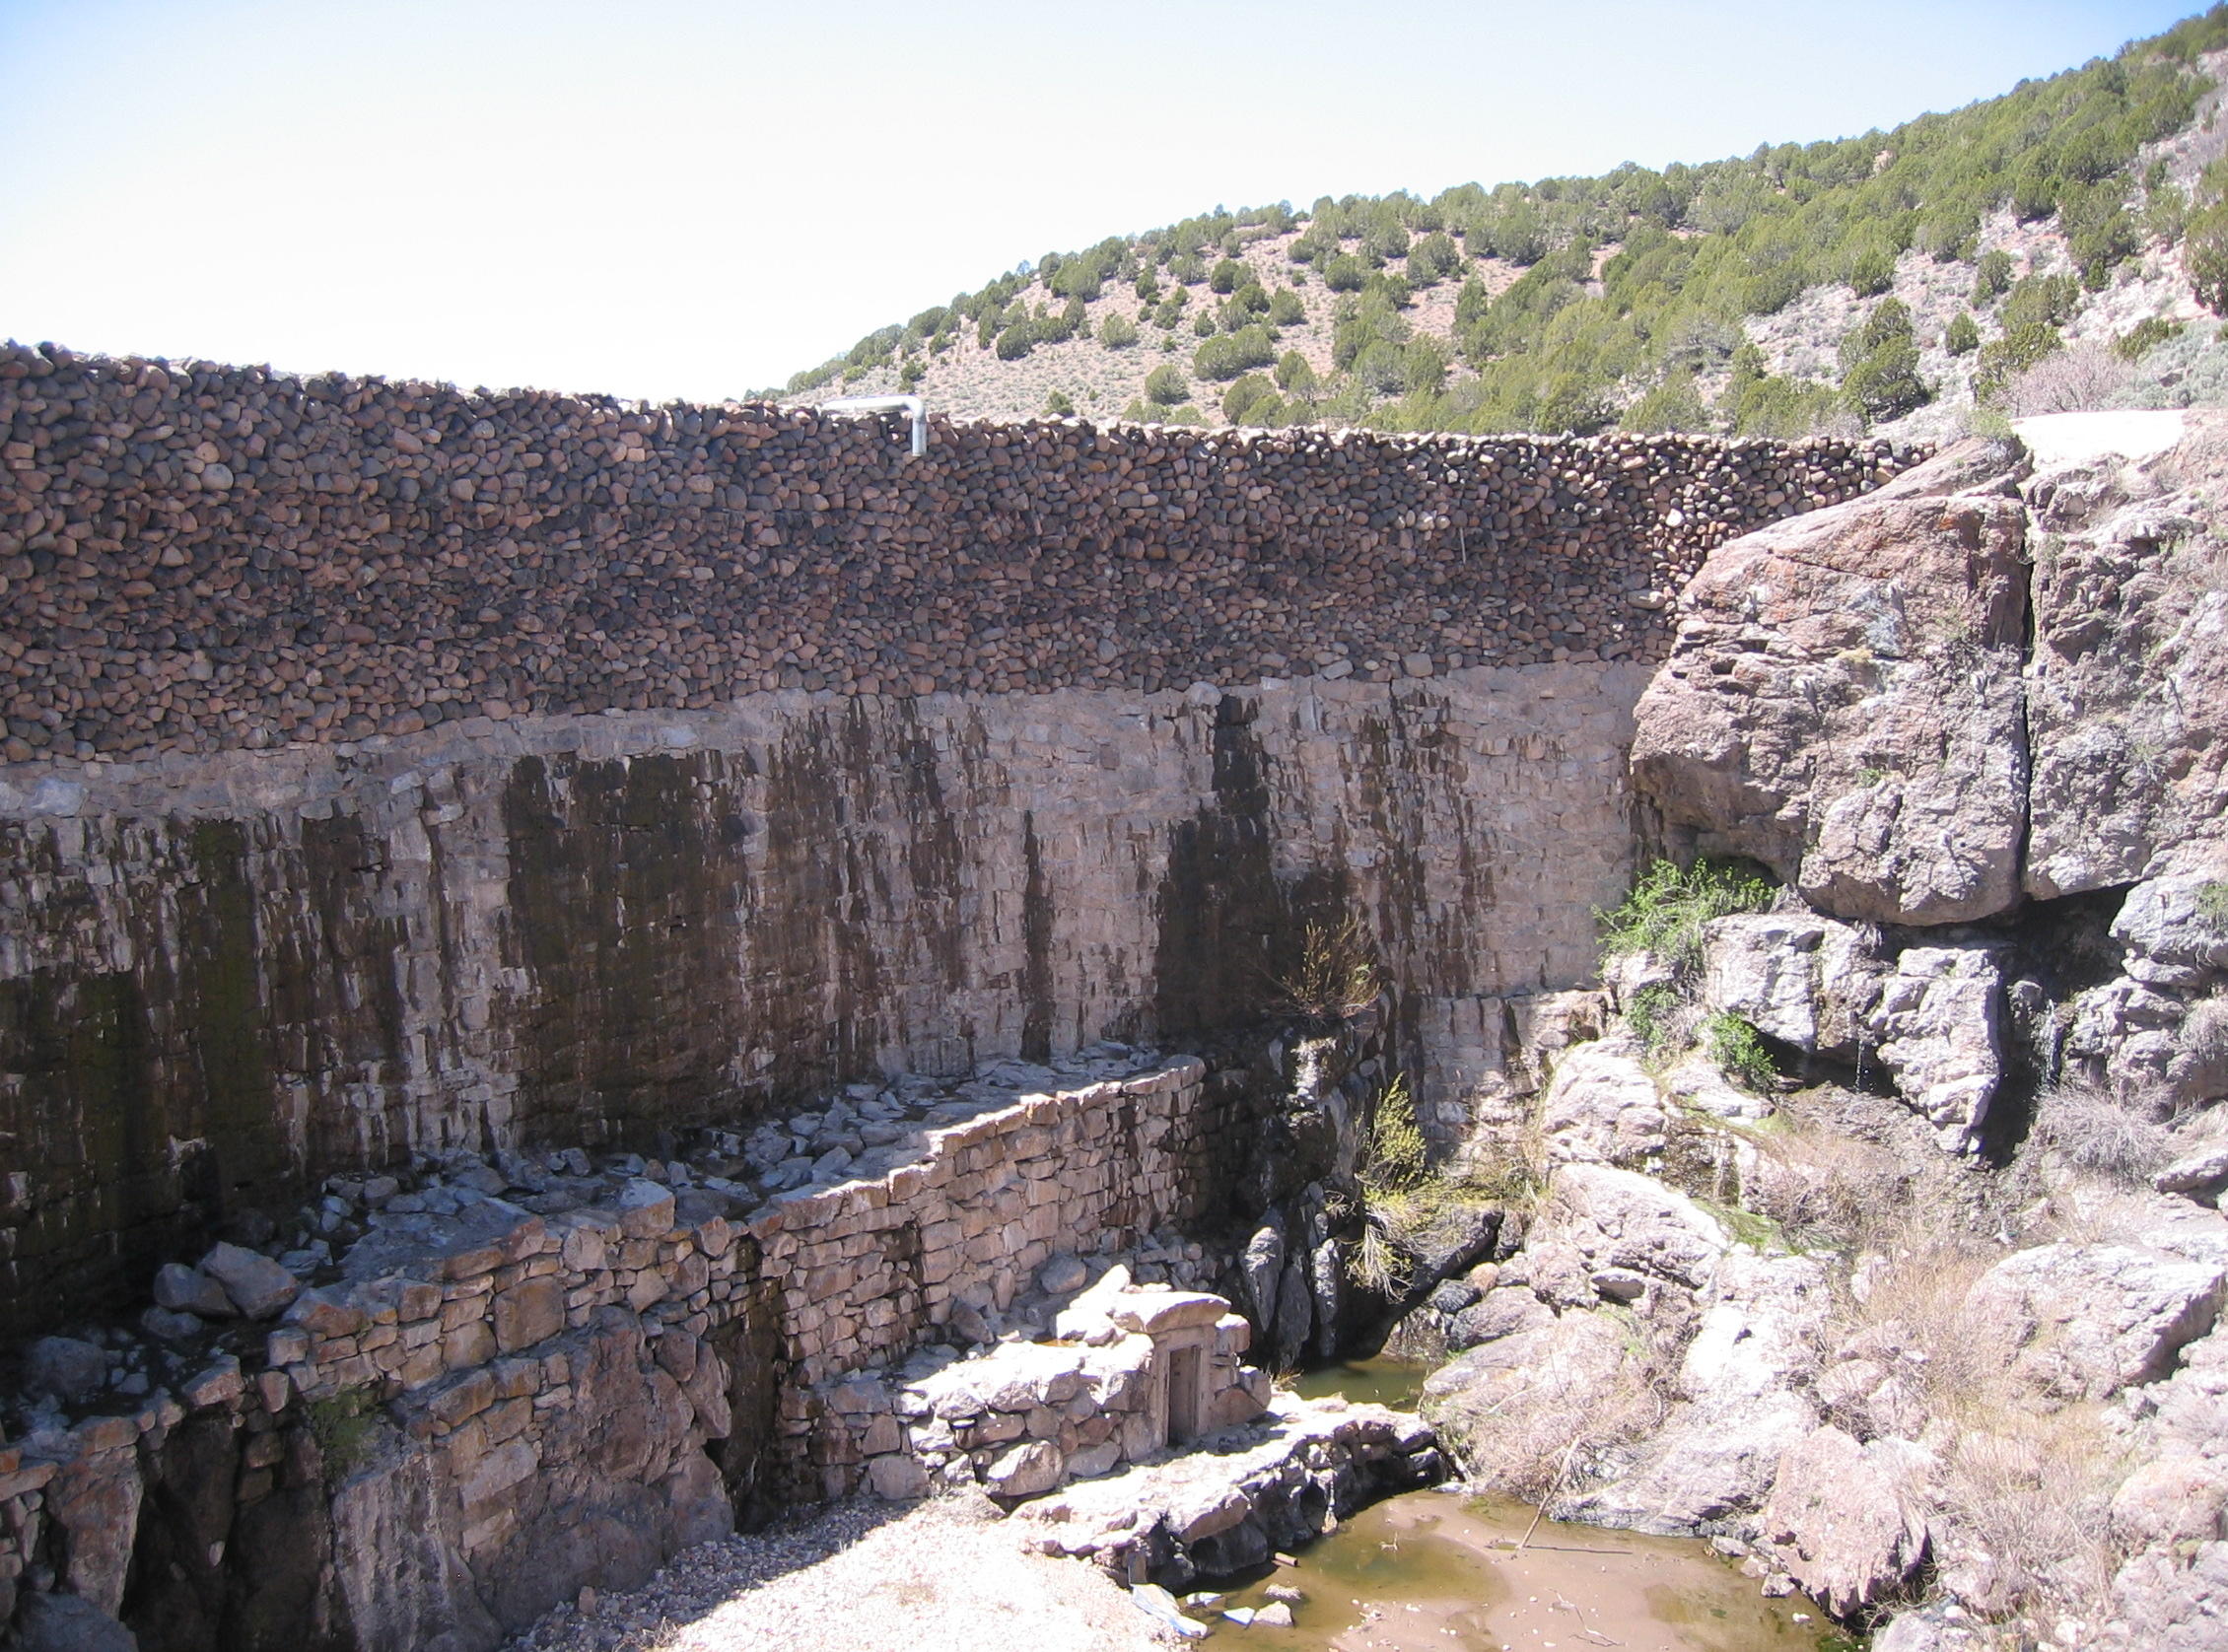 Enterprise Dam